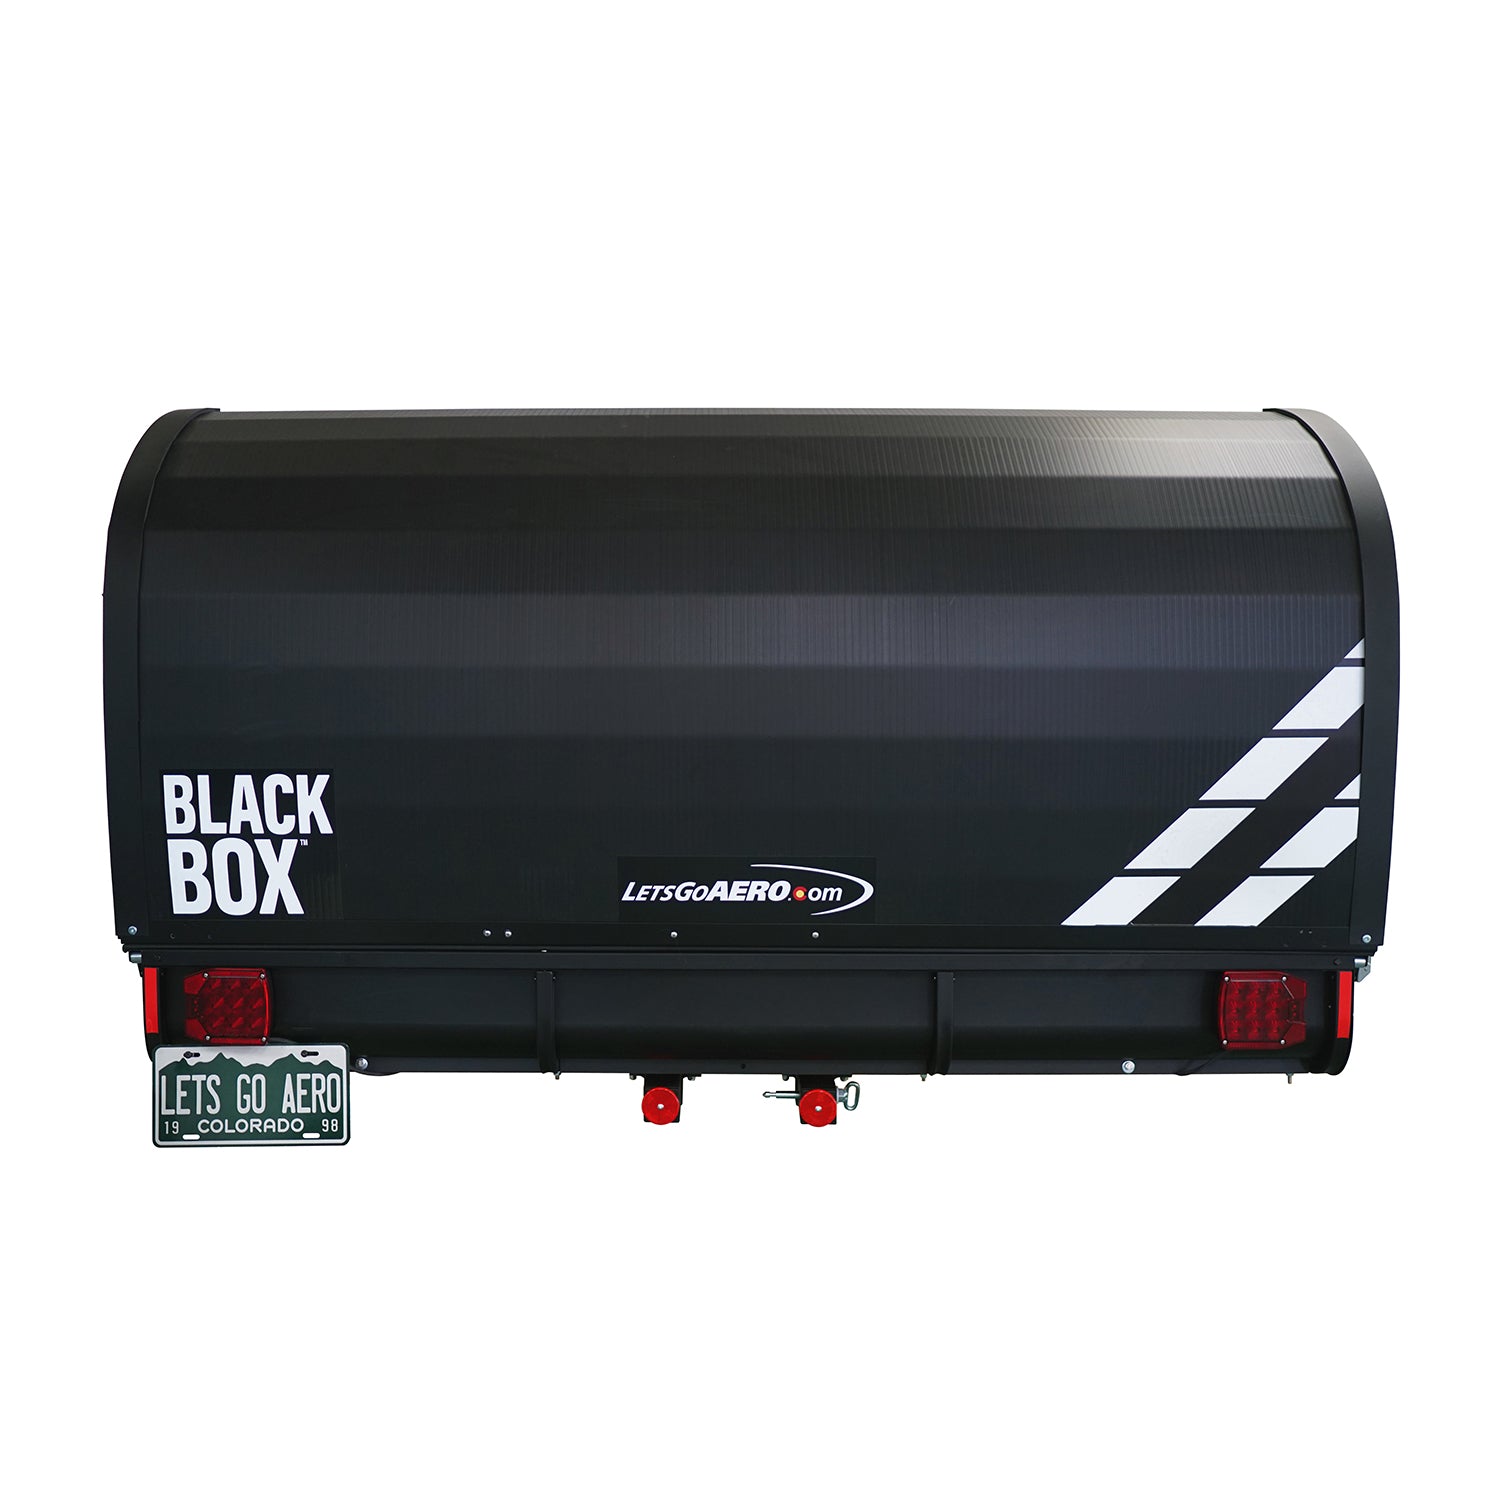 BlackBox Slideout Cargo Carrier